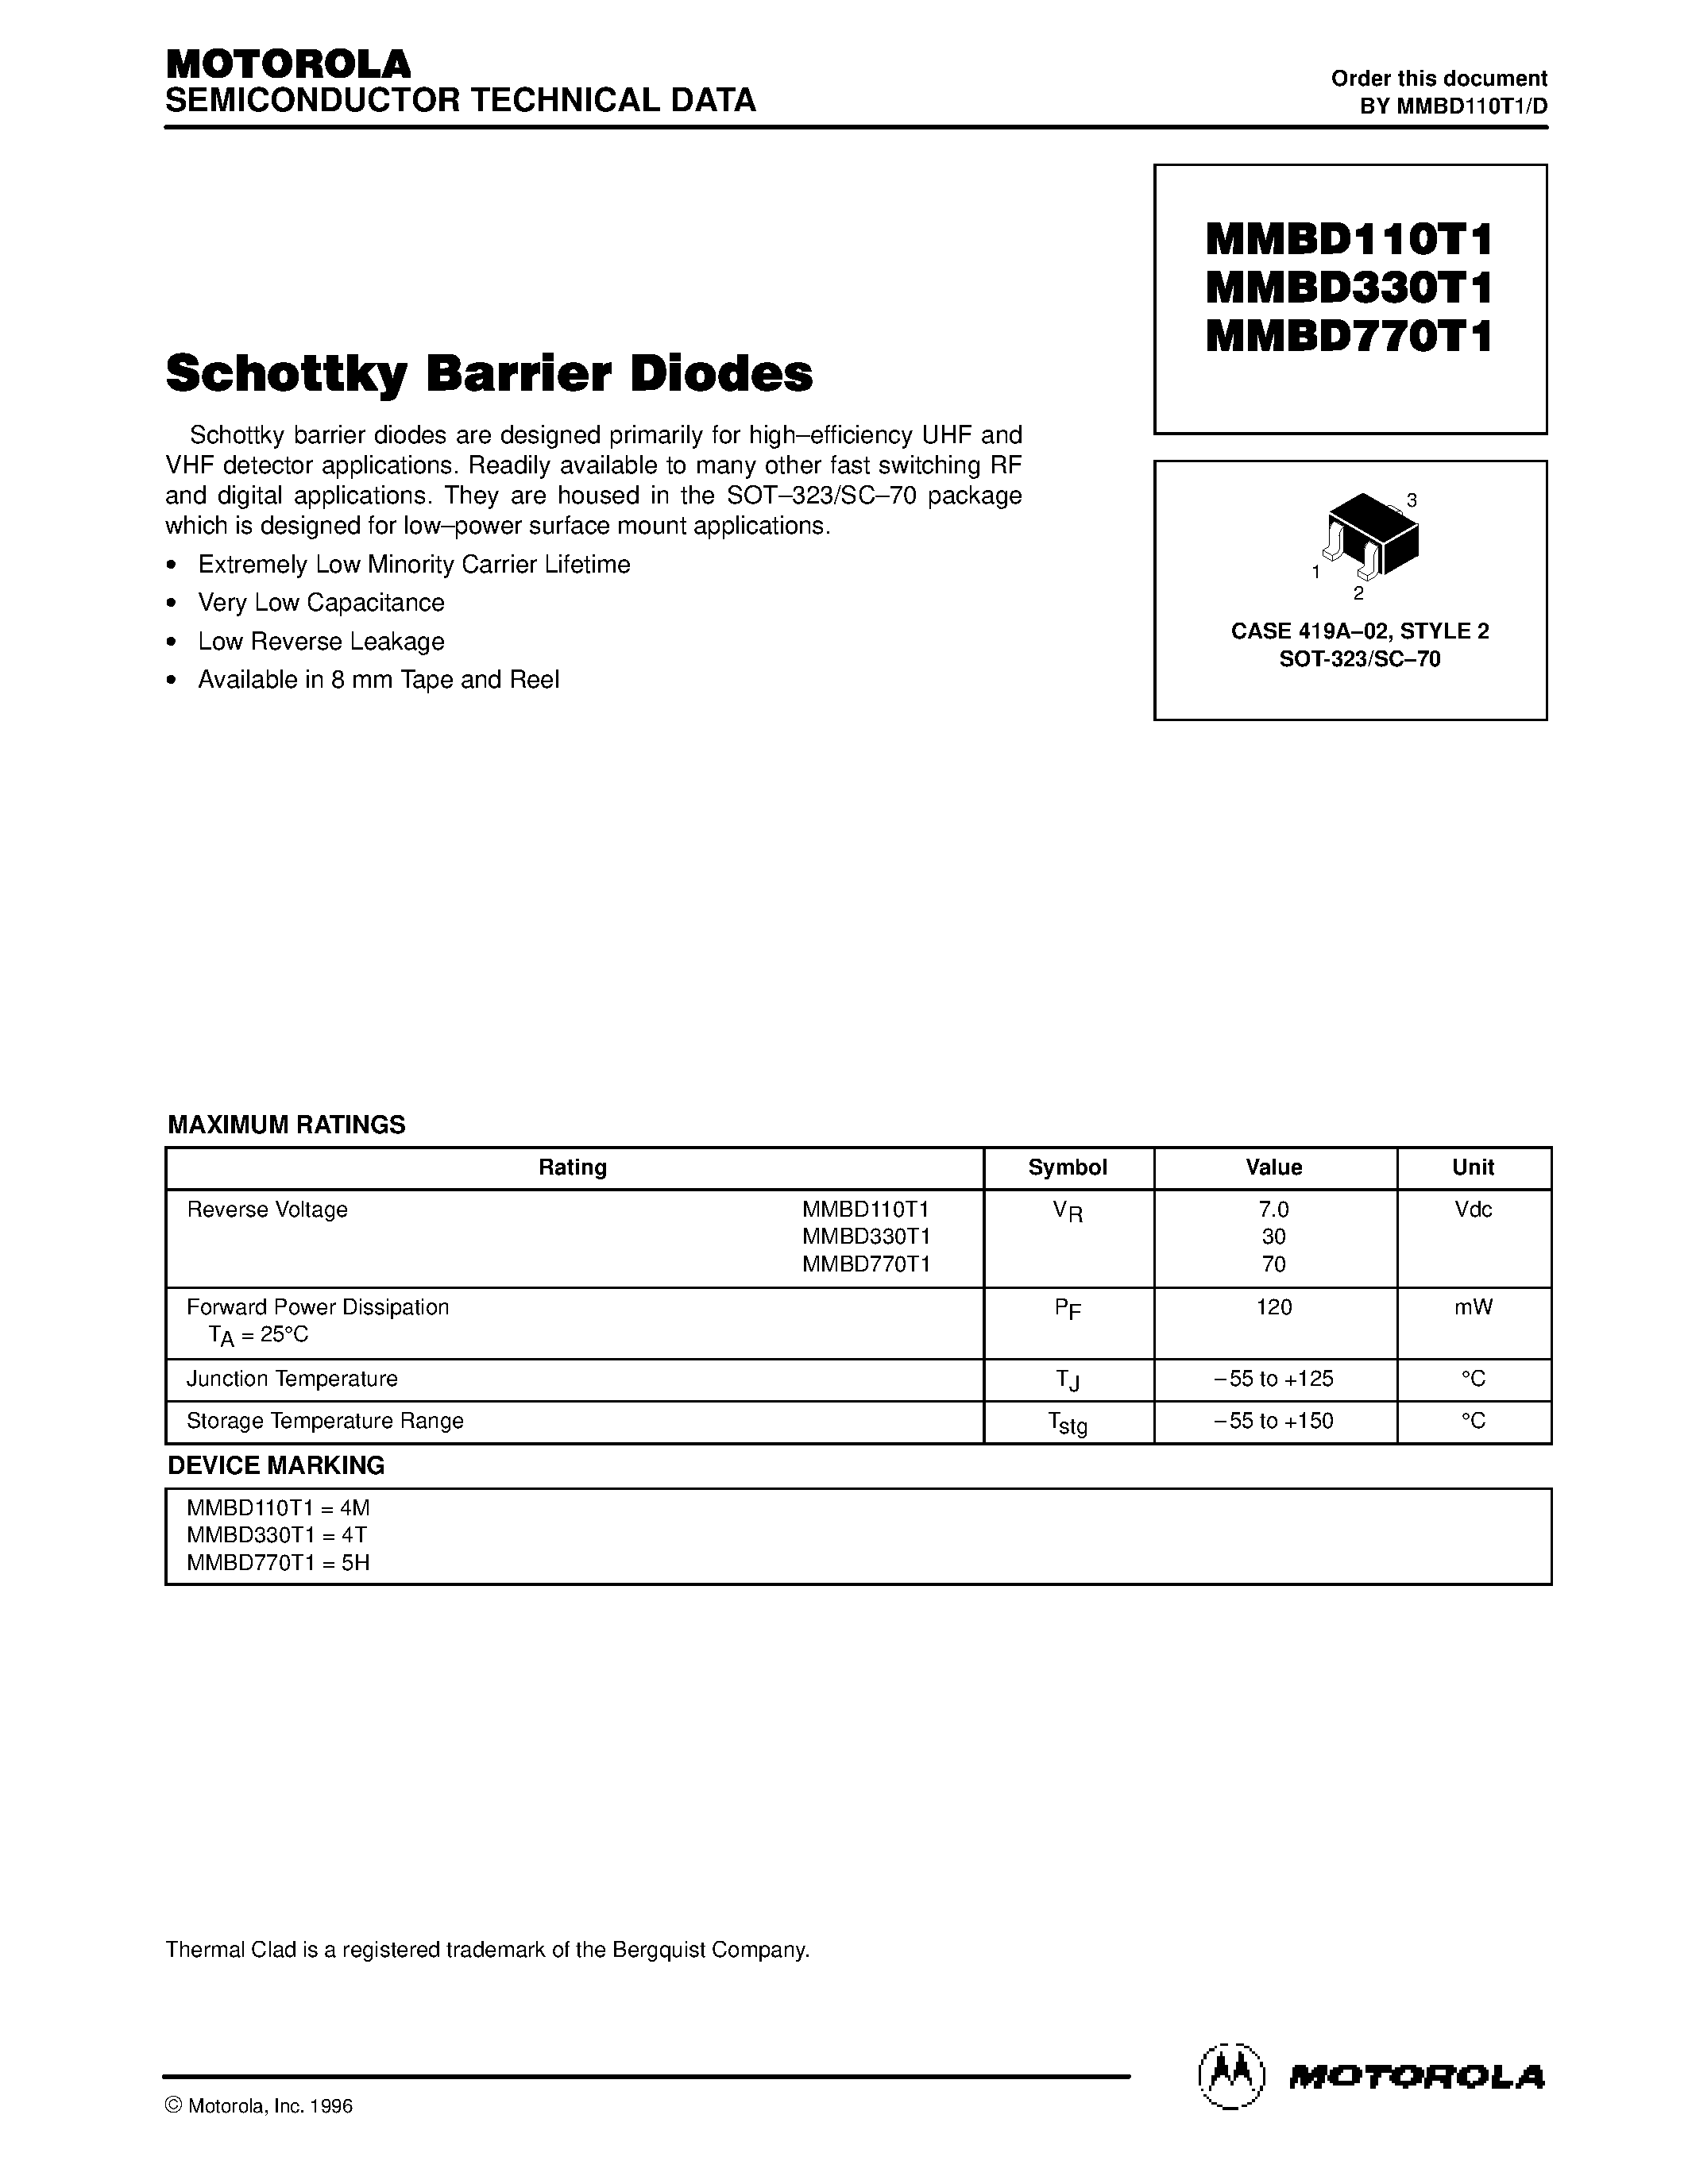 Datasheet MMBD770T1 - Schottky Barrier Diodes page 1